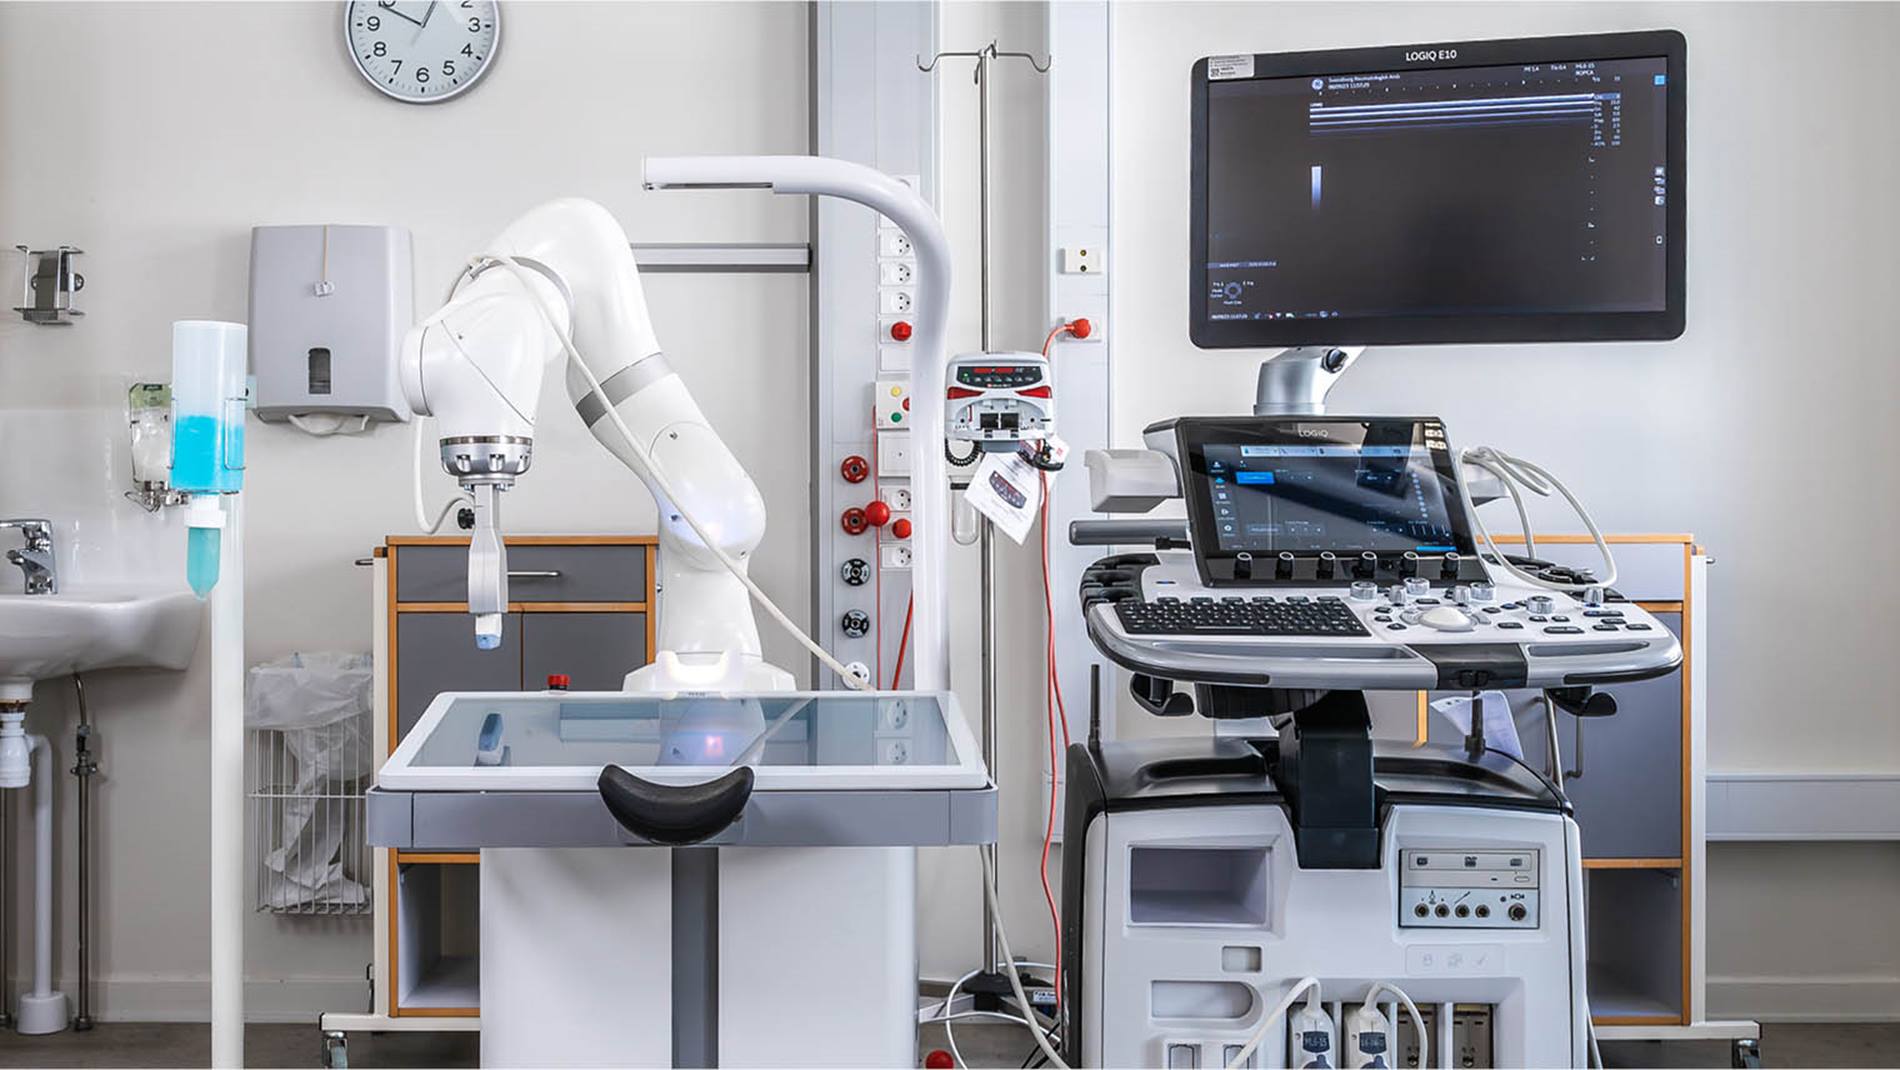 Arthritis robot ARTHUR delivers high quality ultrasound images.